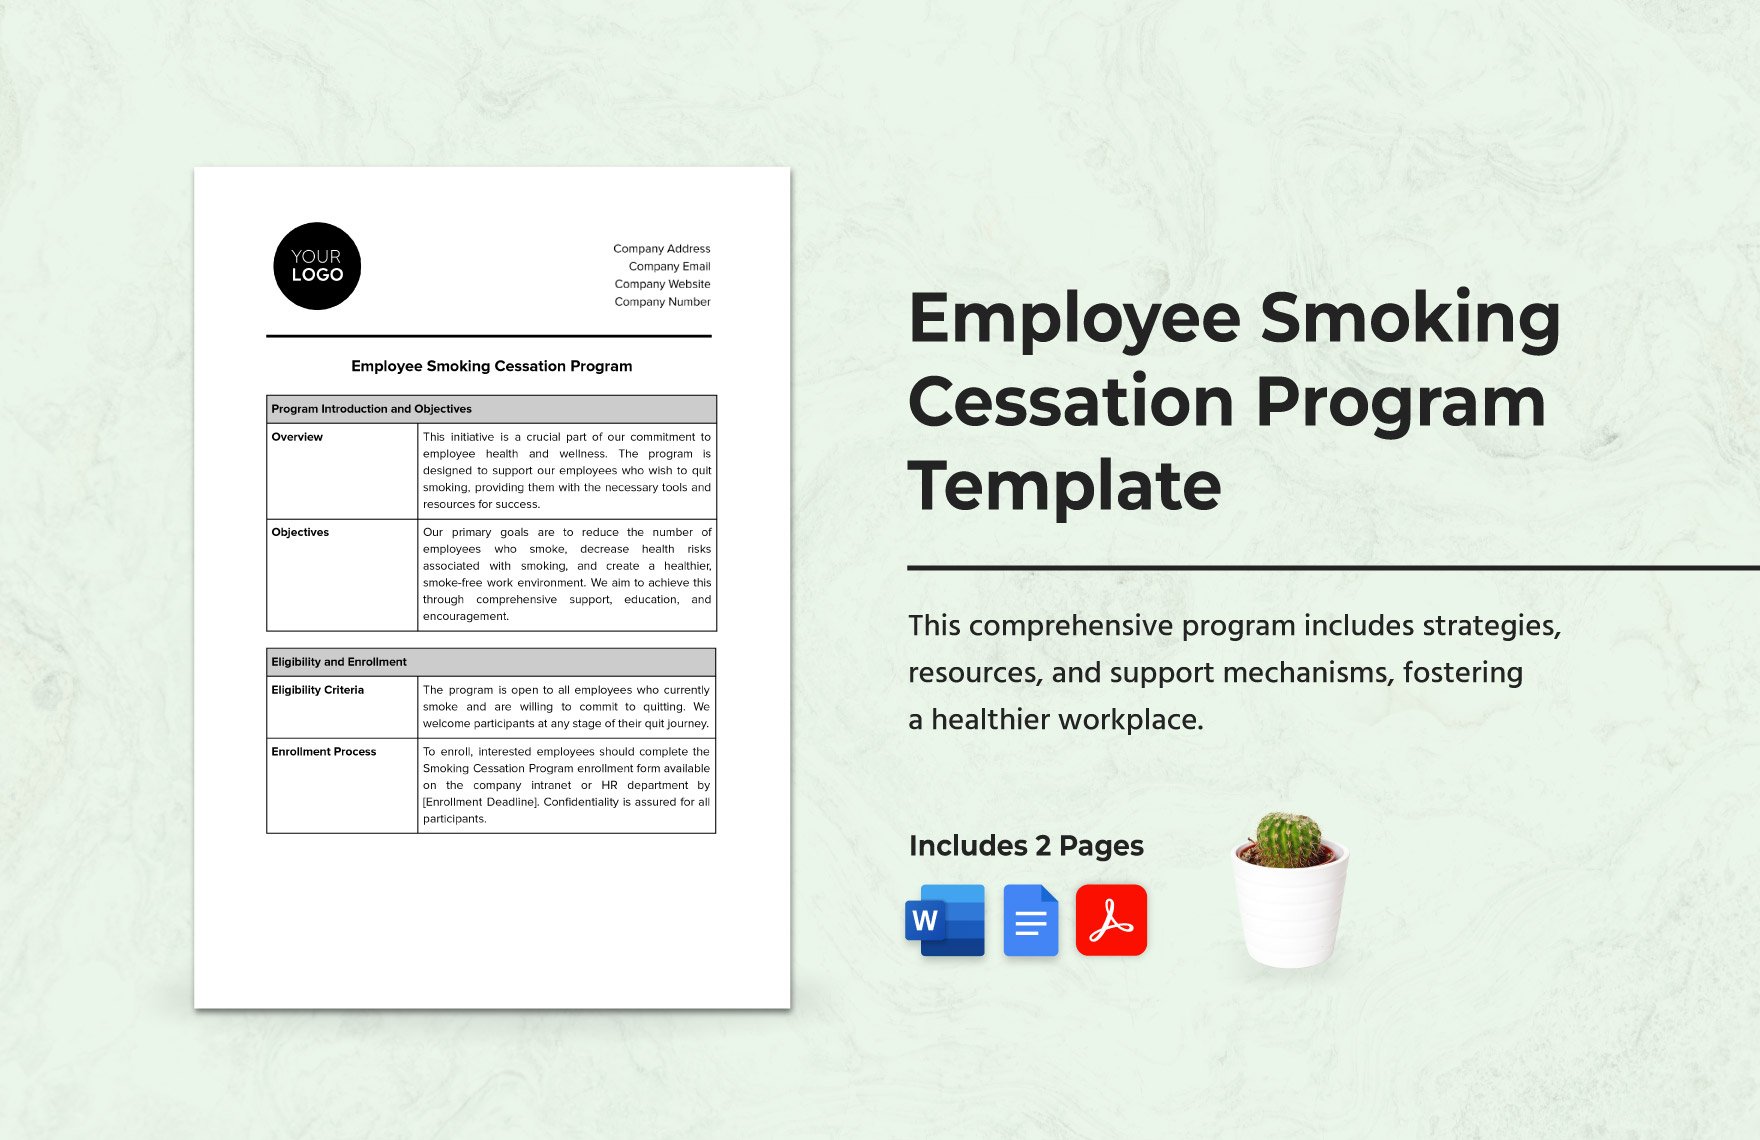 Employee Smoking Cessation Program Template